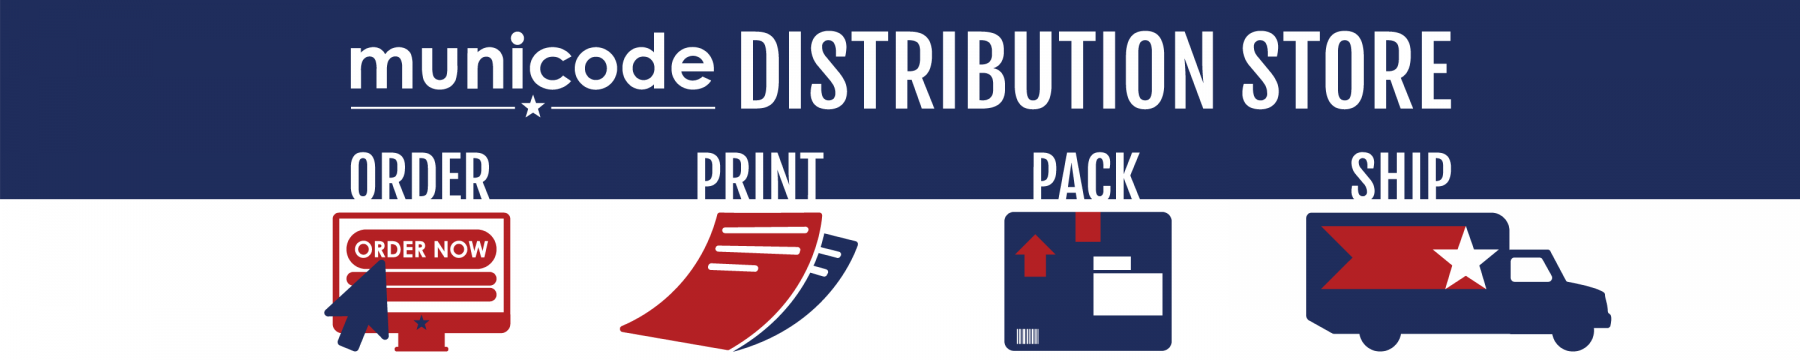 Municode distribution store, order, print, pack, ship